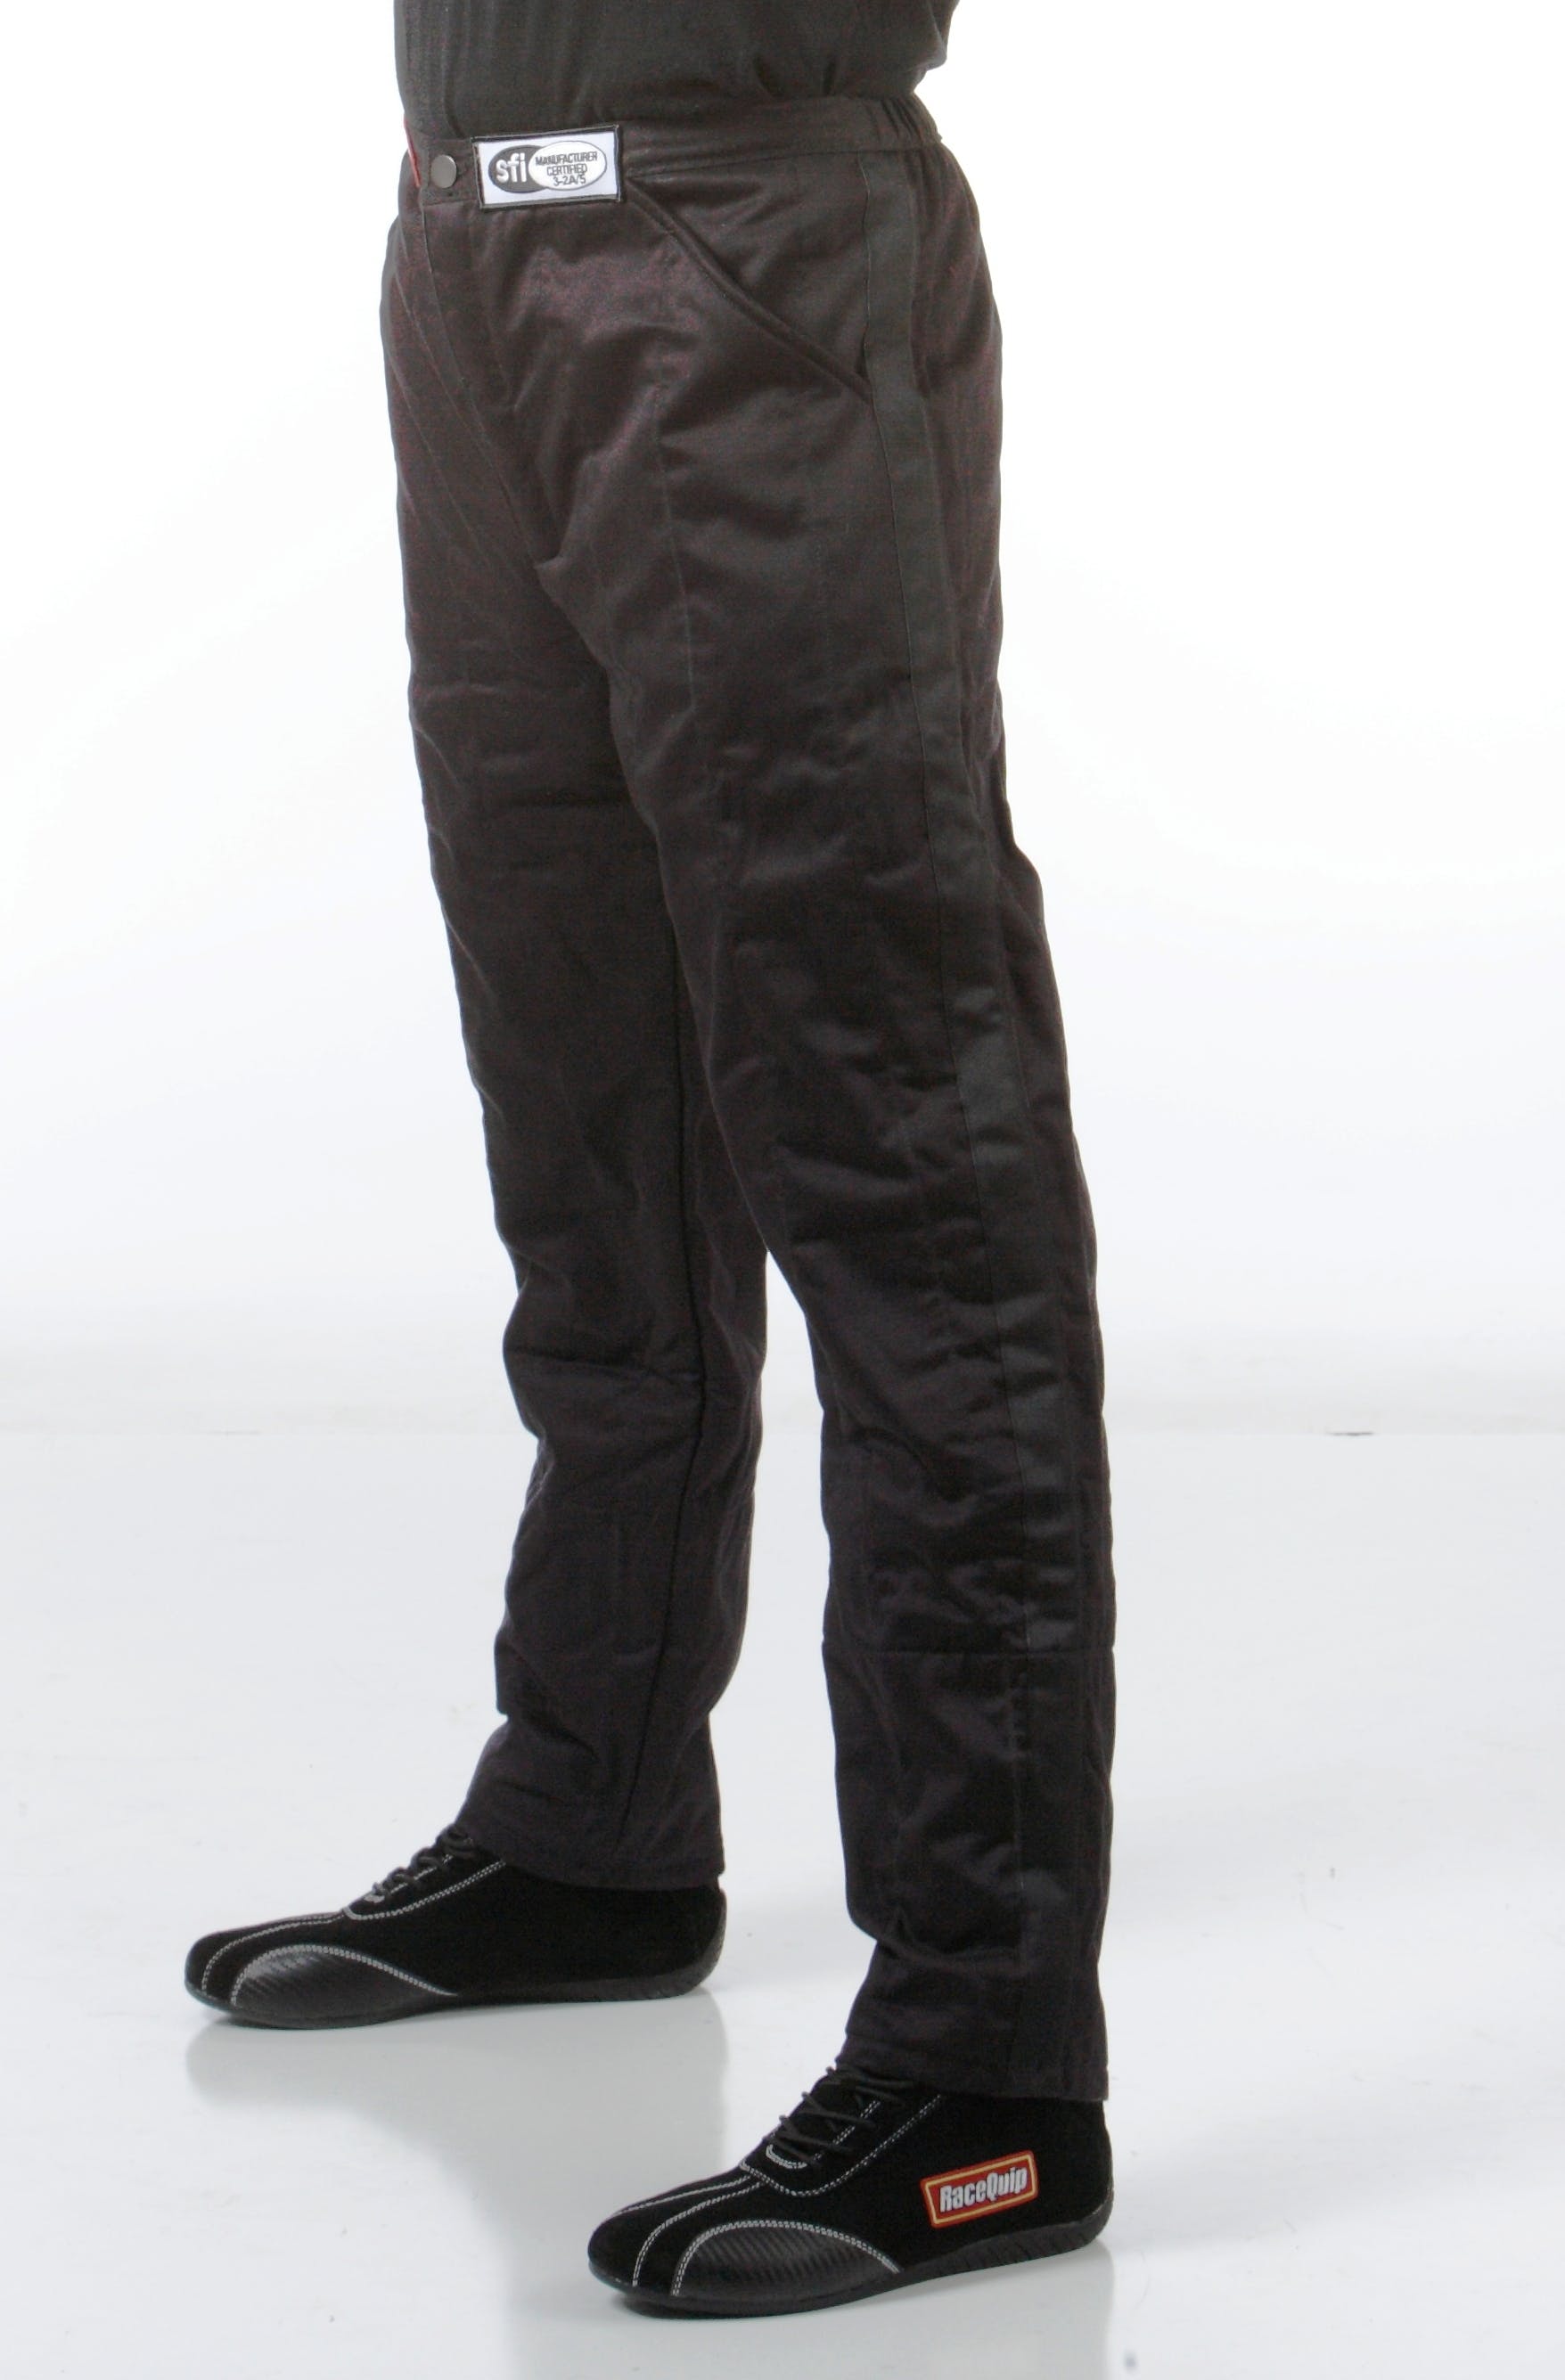 RaceQuip 122006 SFI-5 Pyrovatex Multi-Layer Racing Fire Pants (Black, X-Large)